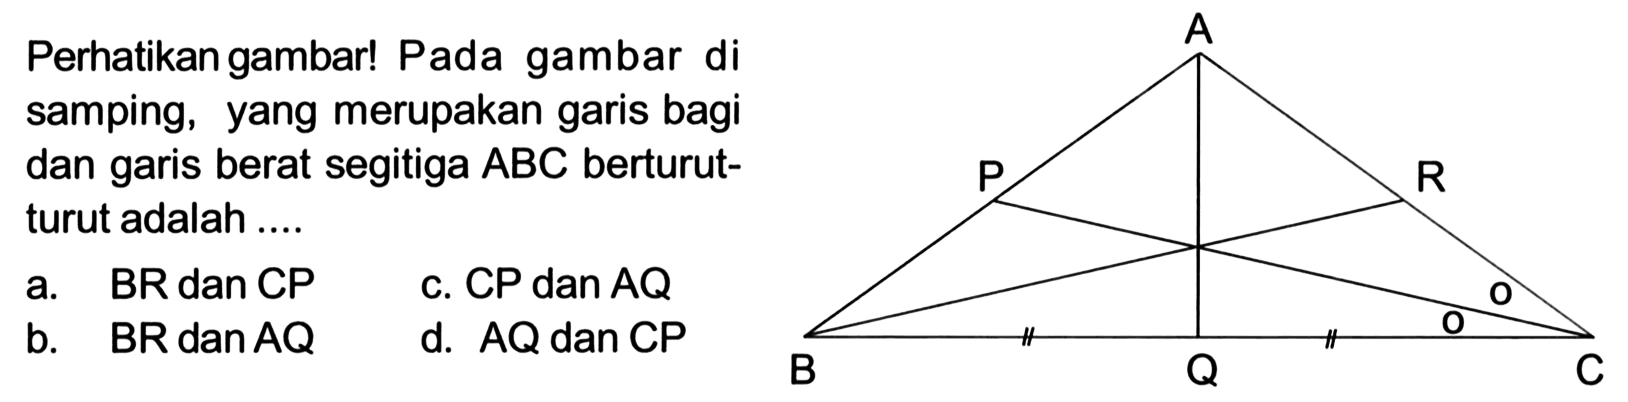 Perhatikan gambar! Pada gambar disamping, yang merupakan garis bagidan garis berat segitiga  ABC  berturut-turut adalah .... l  a.  BR   dan  CP    c.  CP   dan  AQ    b.  BR   dan  AQ    d.  AQ   dan  CP 